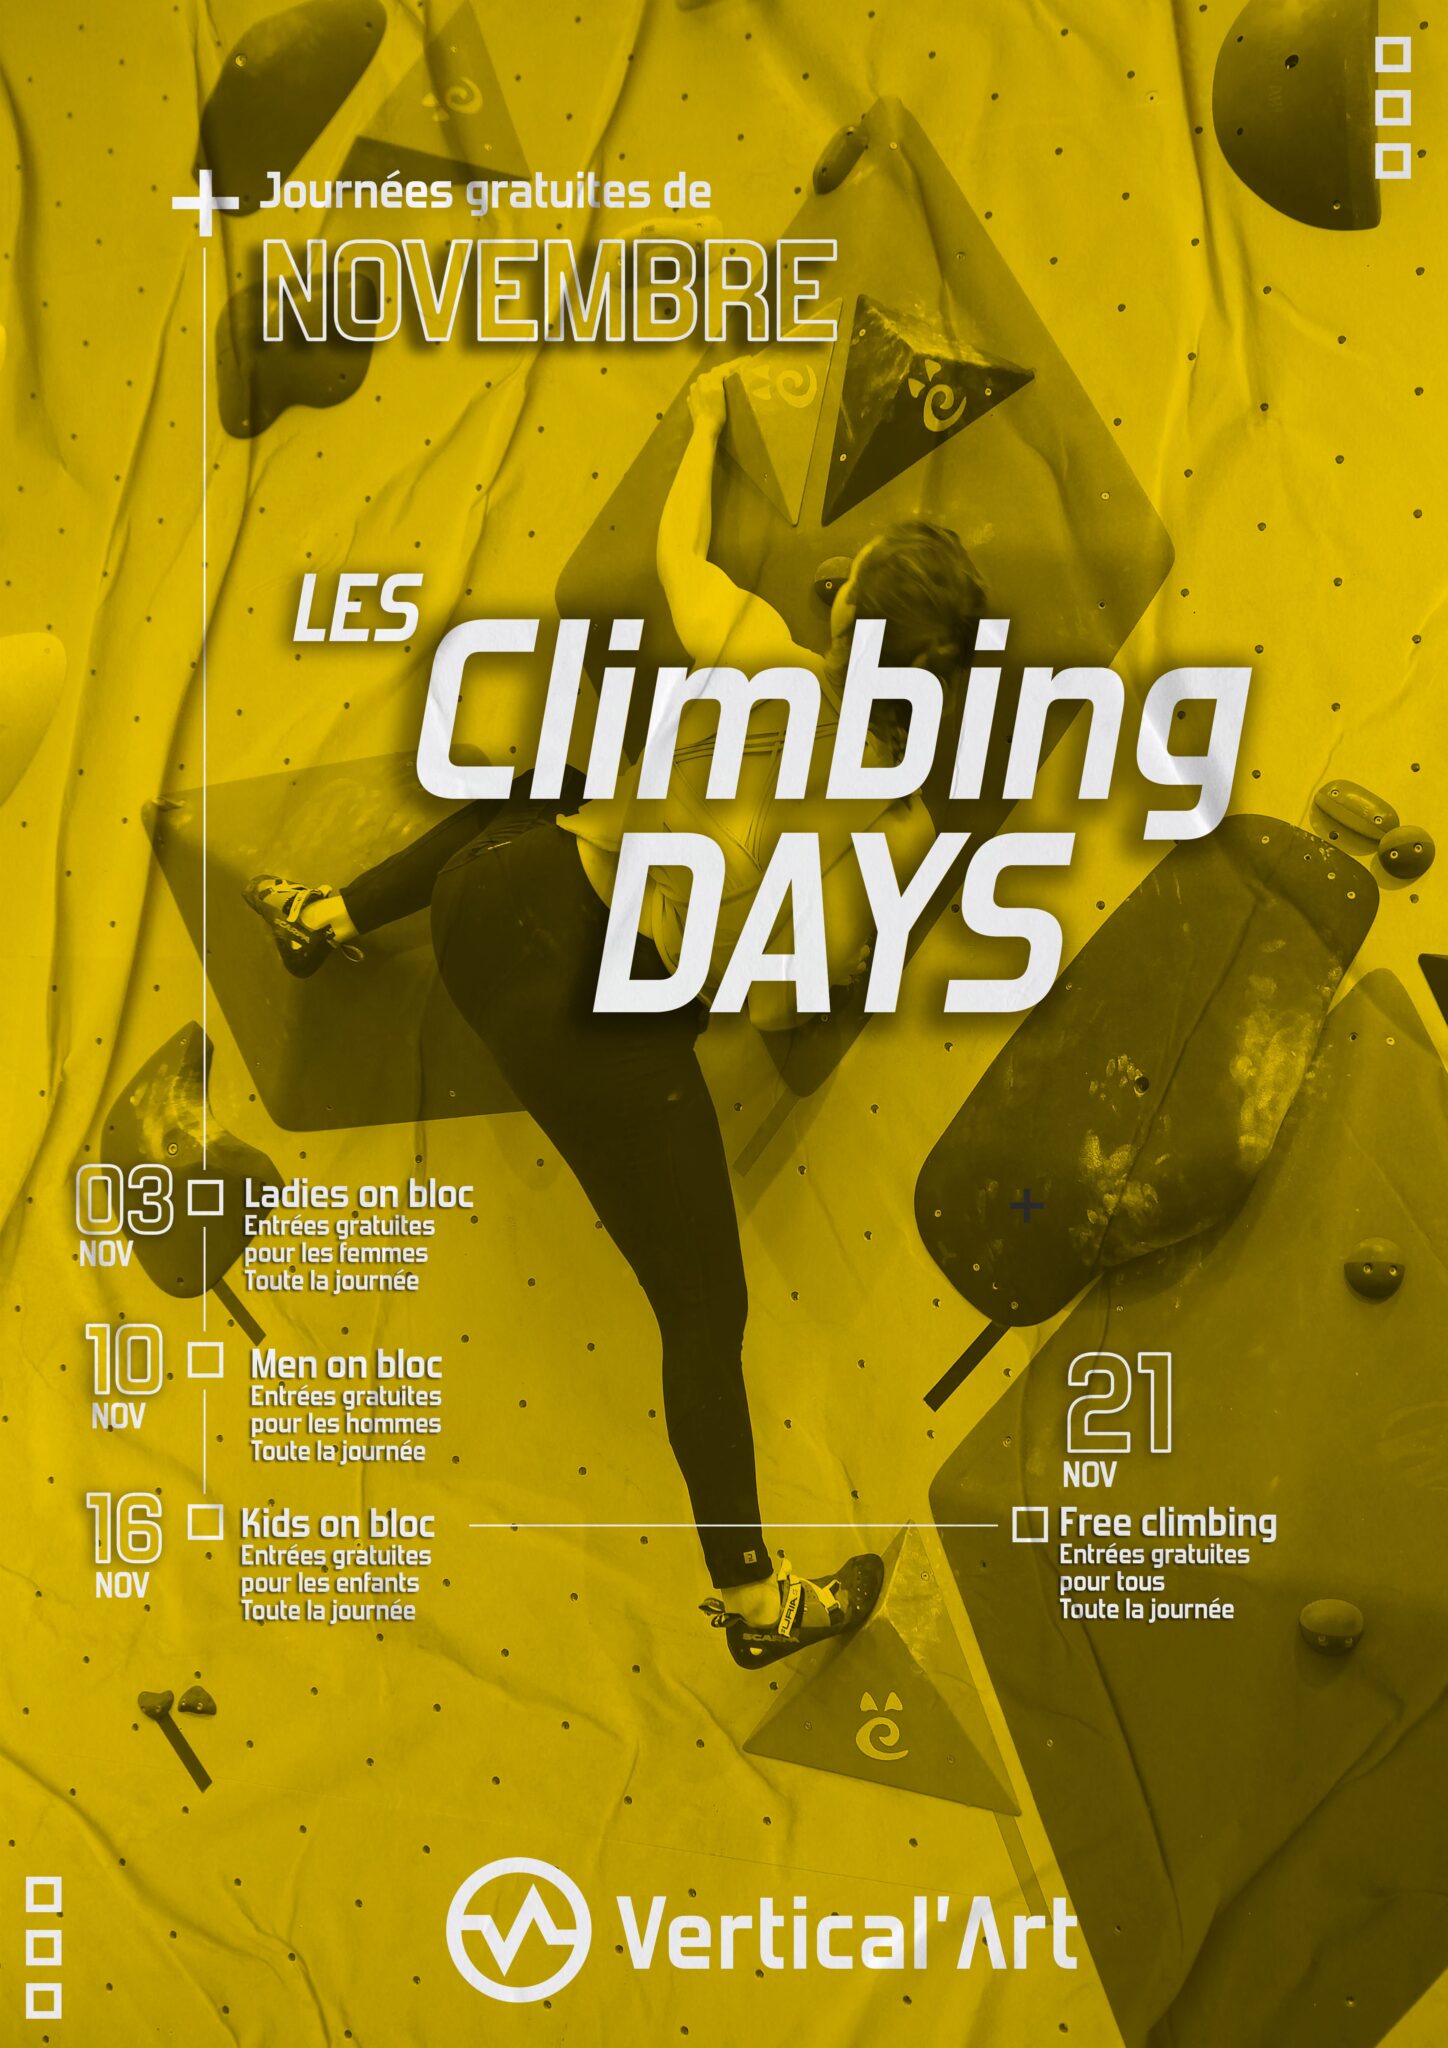 Climbing days à Vertical'Art Chevaleret Novembre 2022